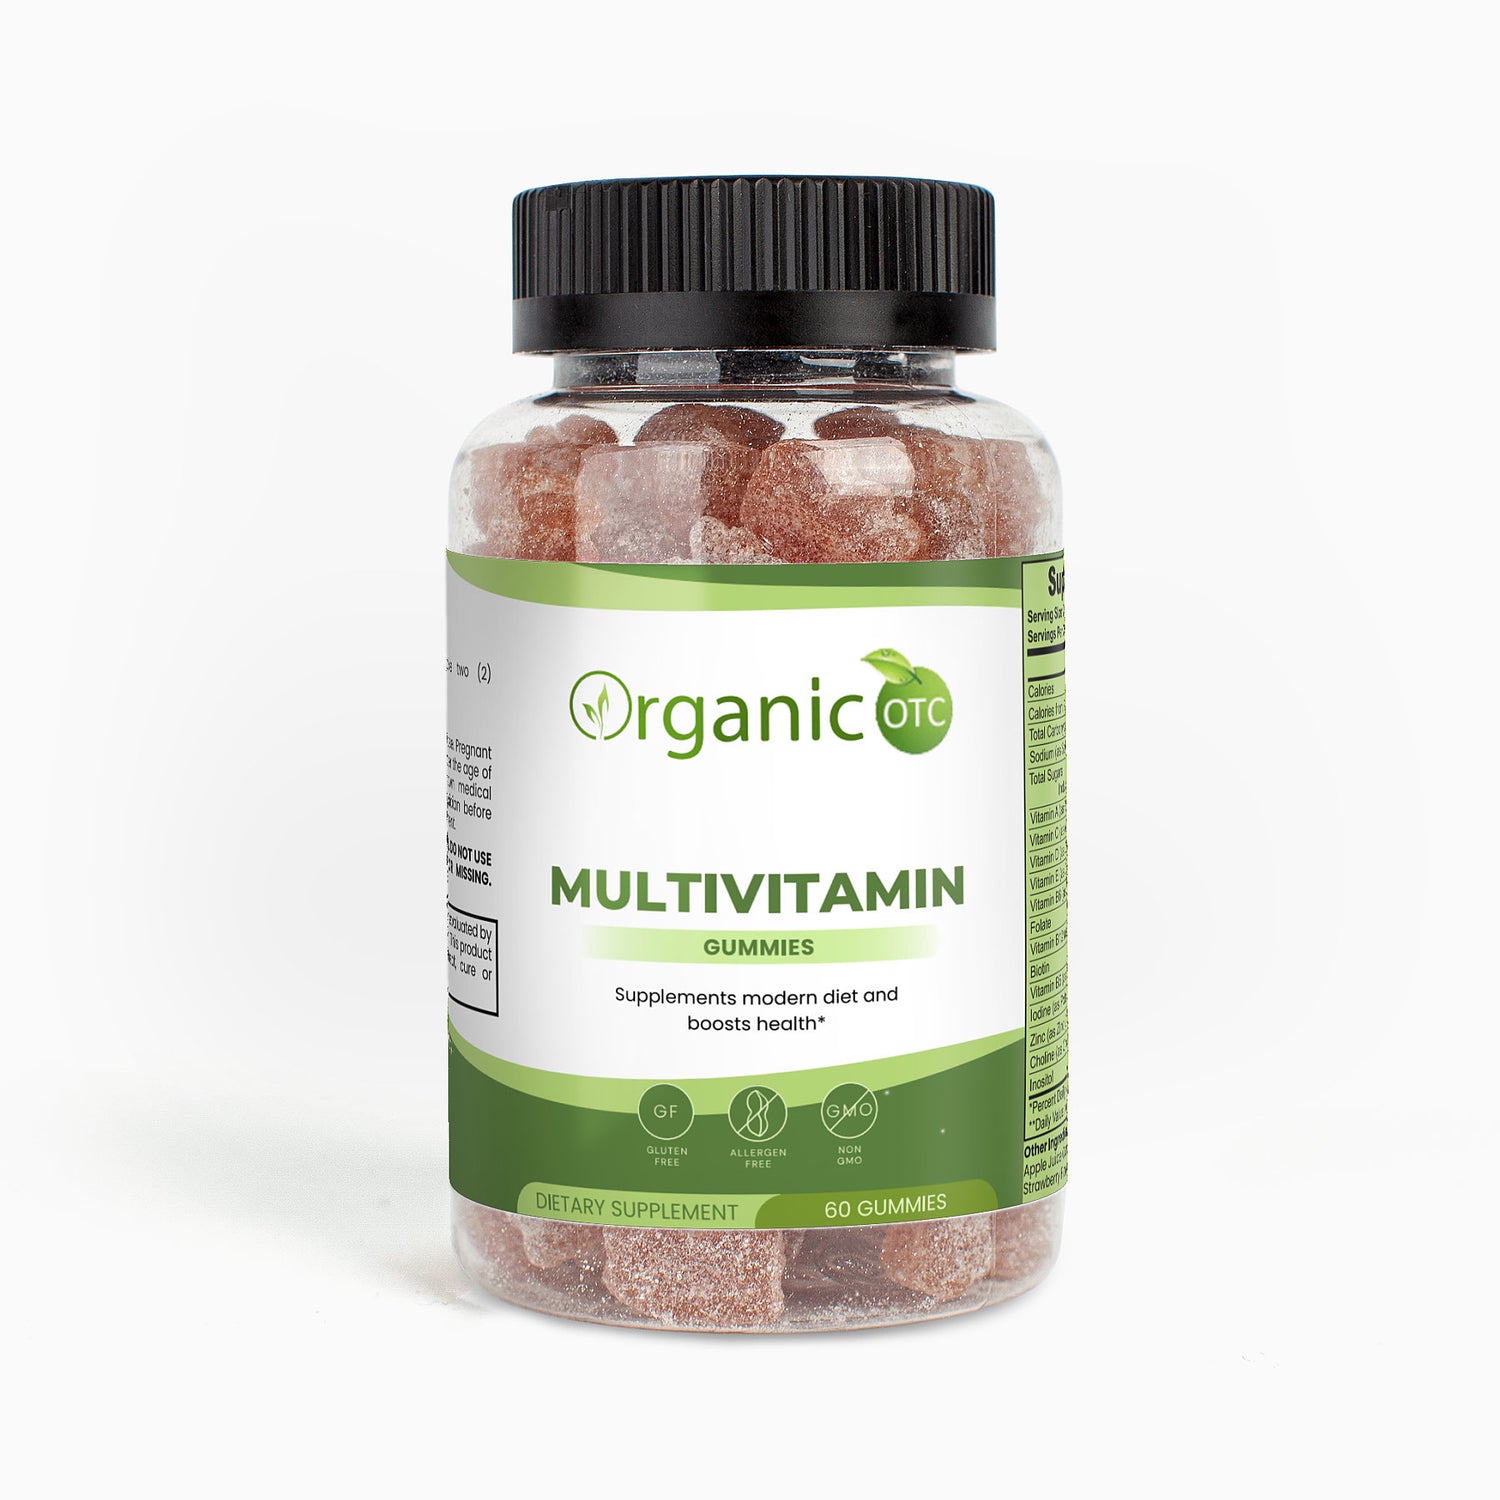 Multivitamin Bear Gummies Adult